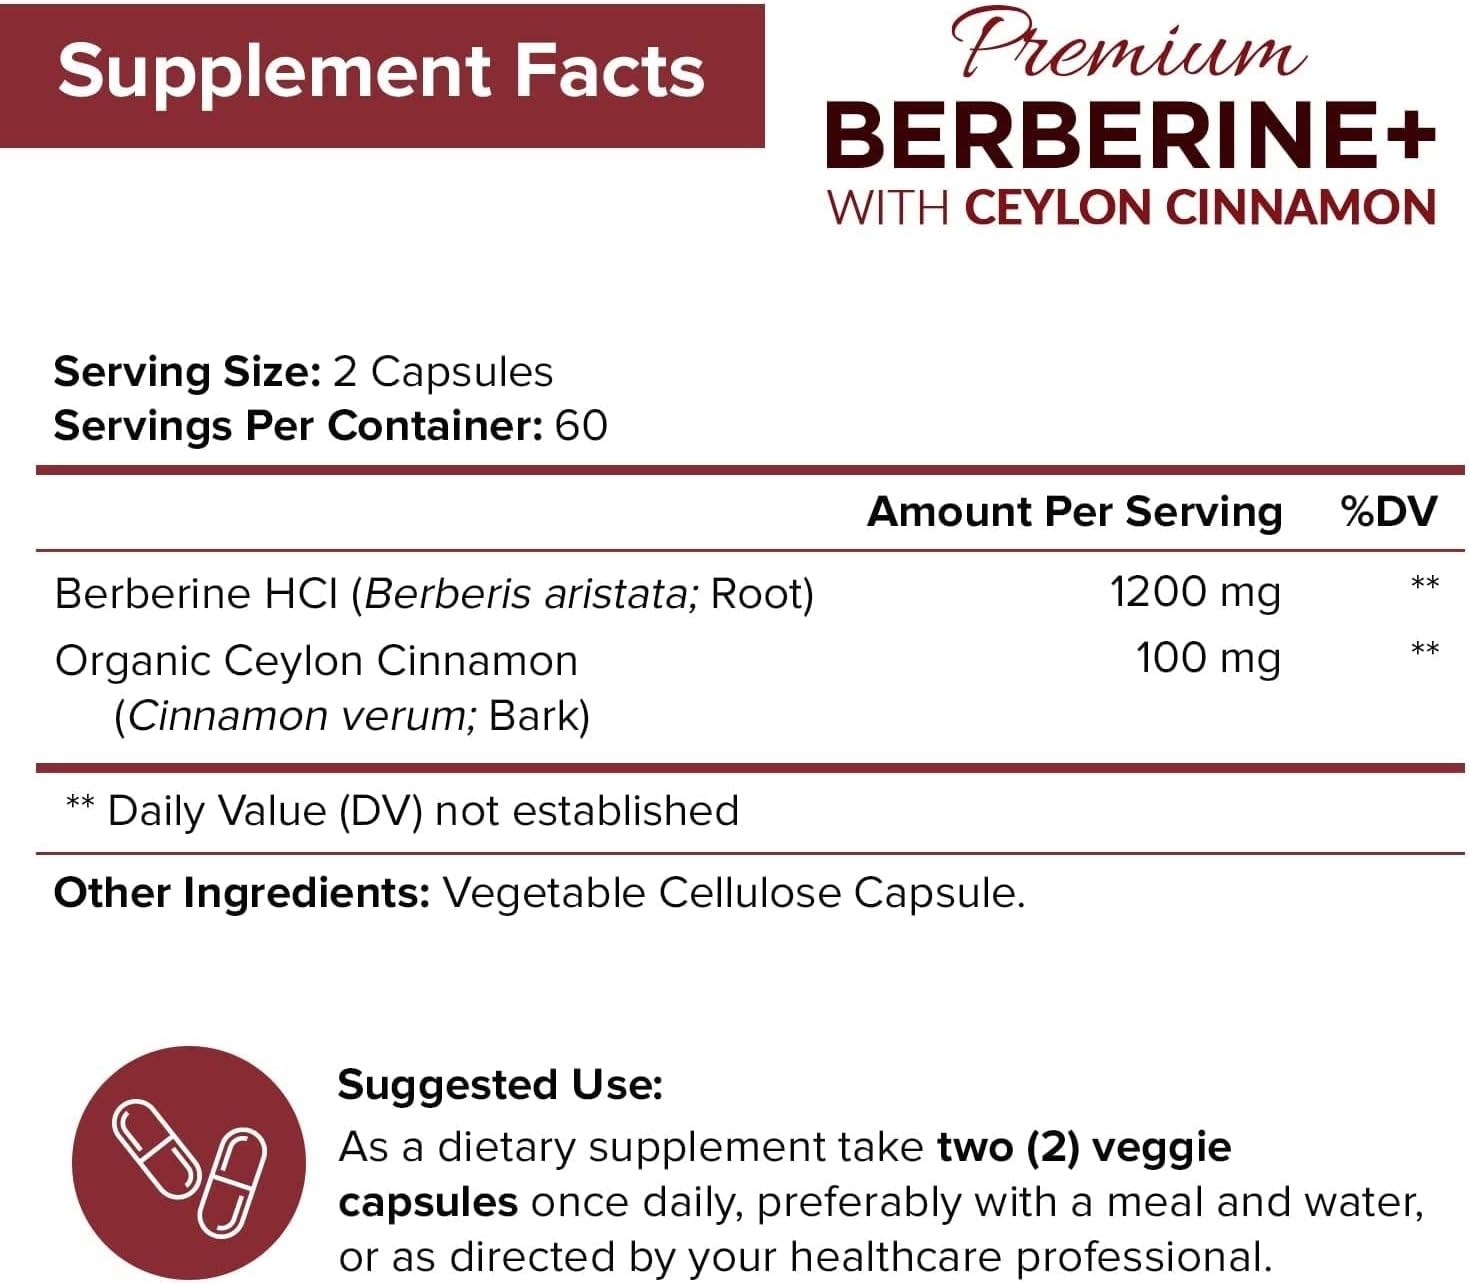 NutriFlair Premium Berberine HCL 1200mg, 120 Capsules - Plus Pure True Ceylon Cinnamon, Berberine HCI Root Supplements Pills - Supports Glucose Metabolism, Immune System, Healthy Weight Management